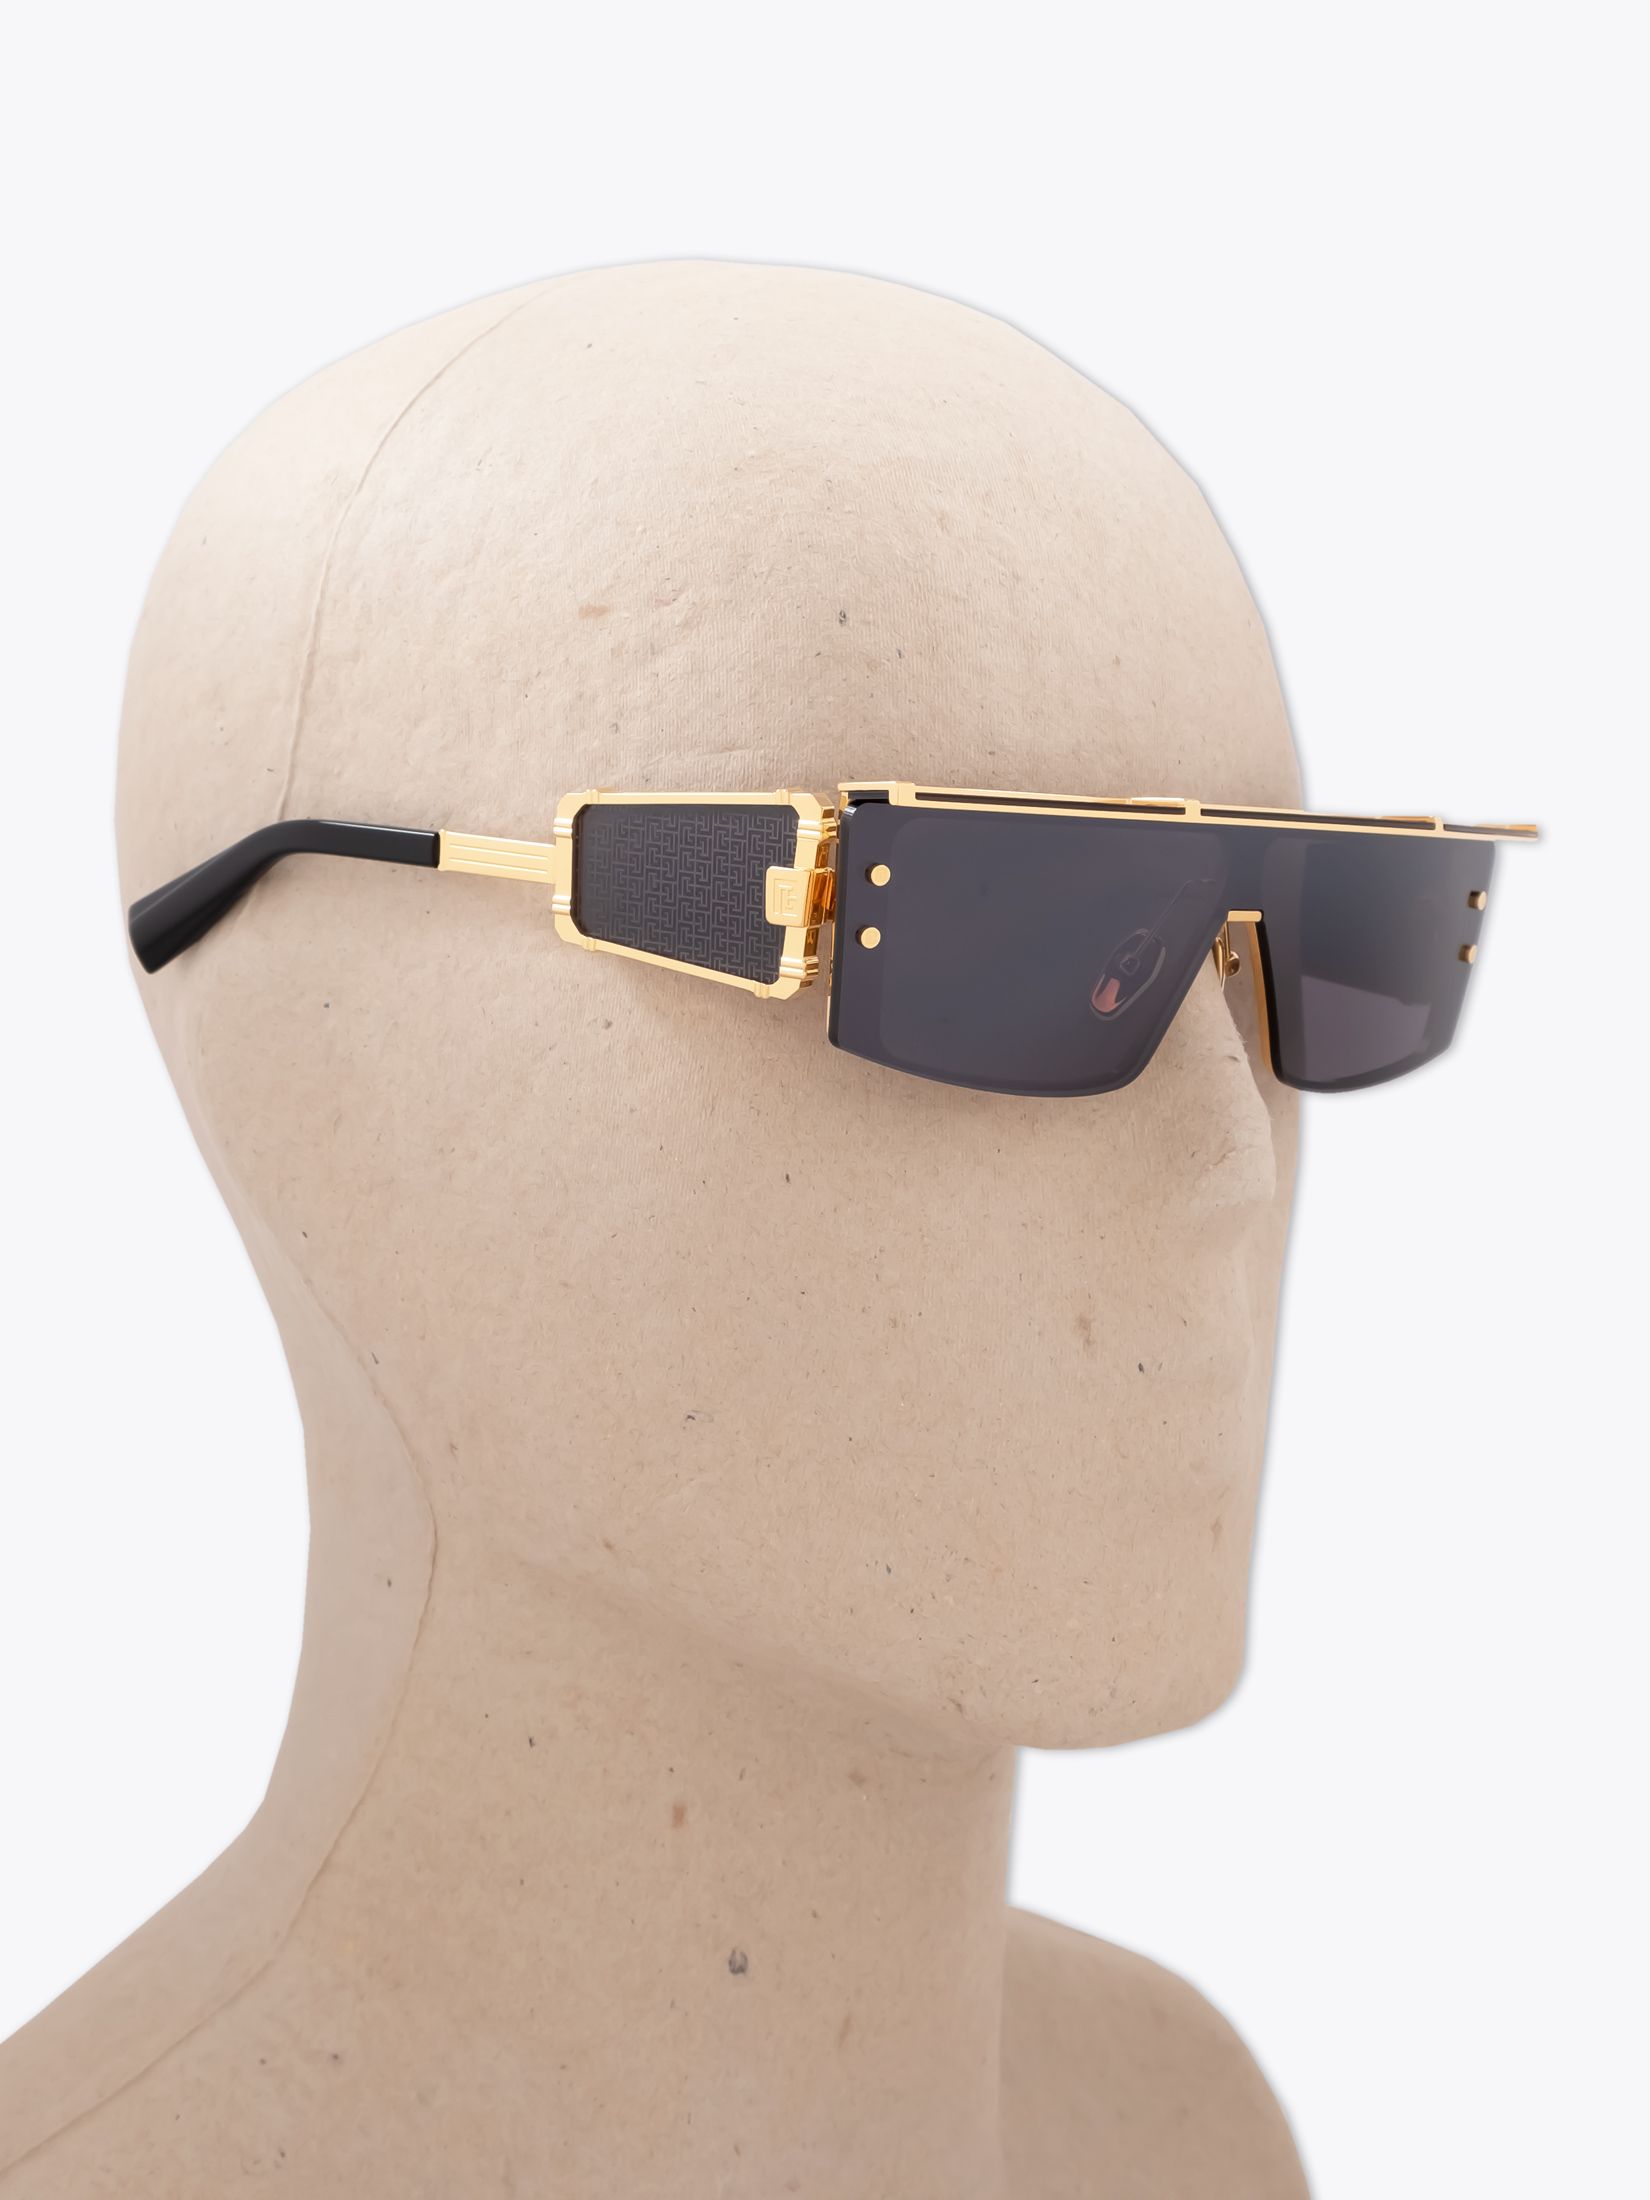 Balmain Eyewear Wonder Boy Square-Frame Sunglasses